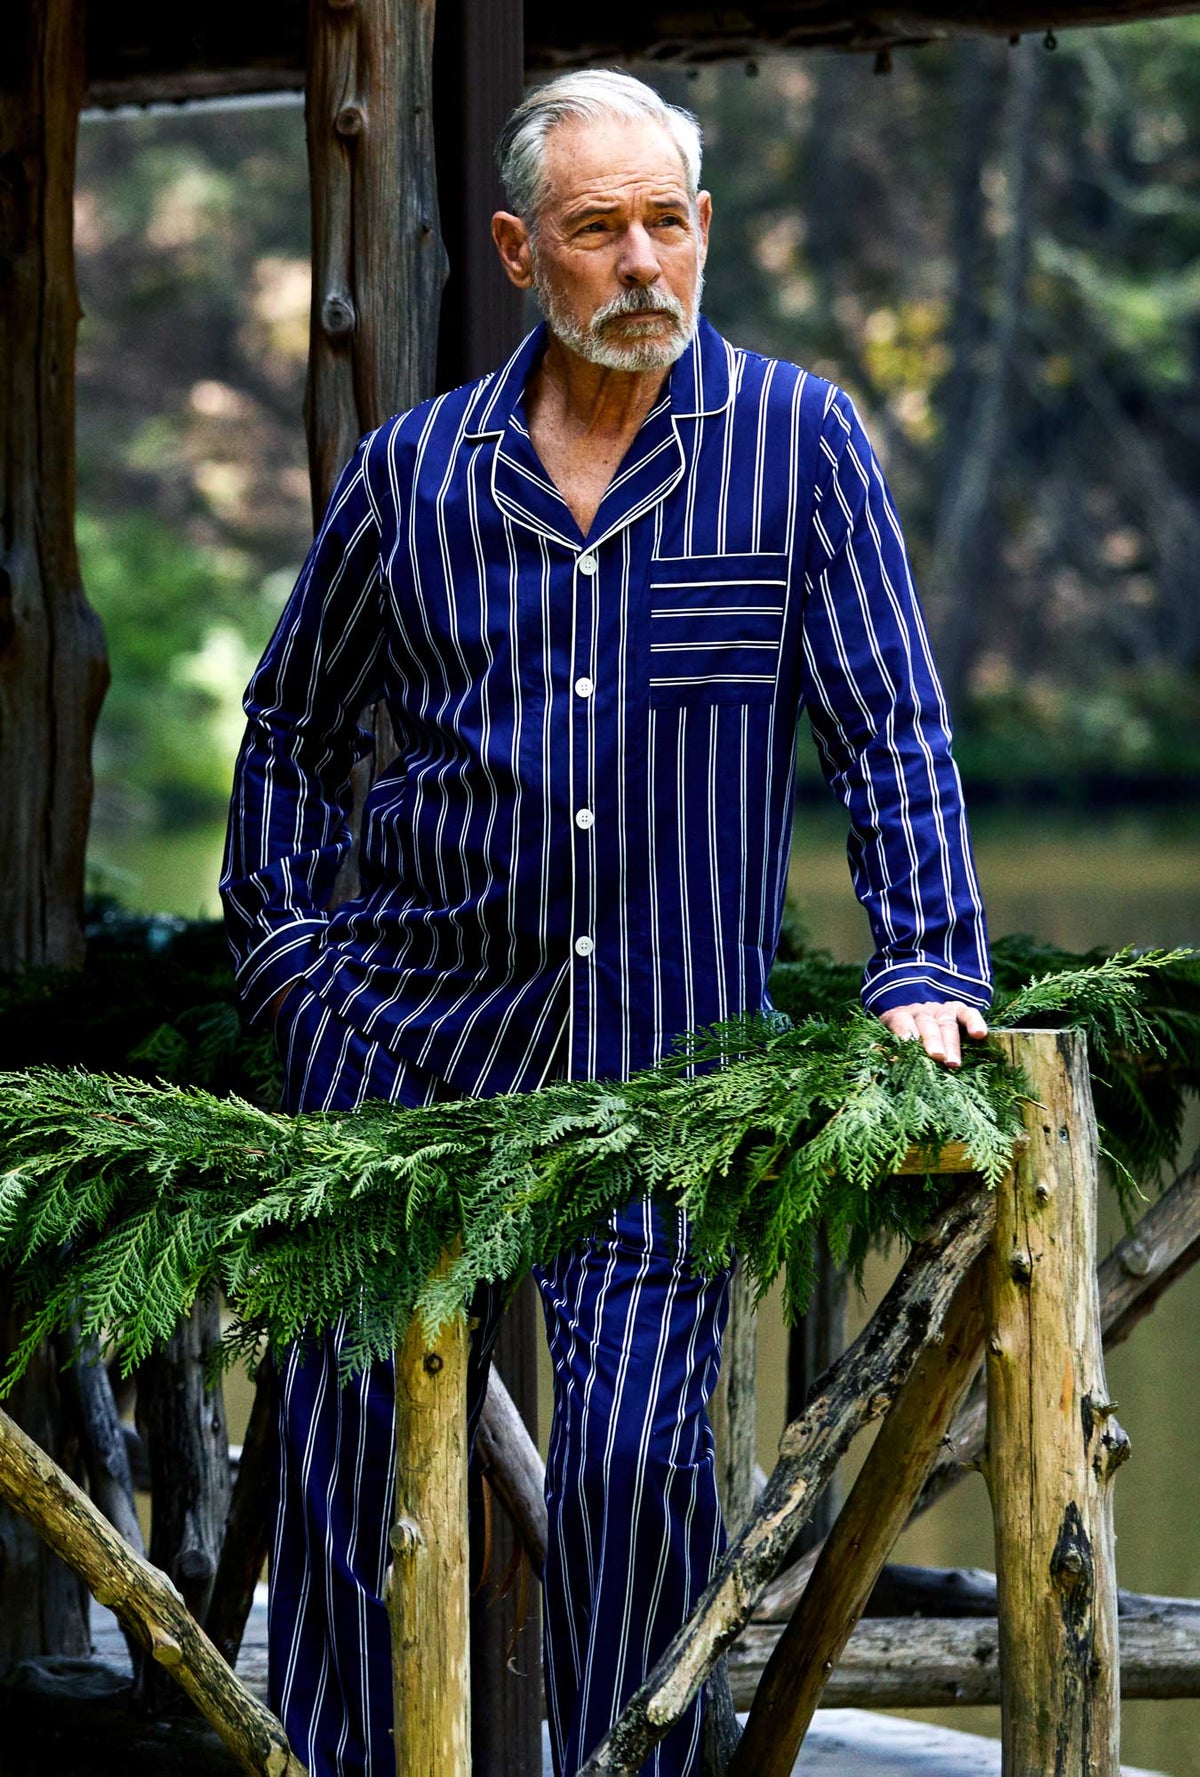 Oxford Stripe Men&#39;s Long Sleeve Classic Woven Cotton Poplin PJ Set